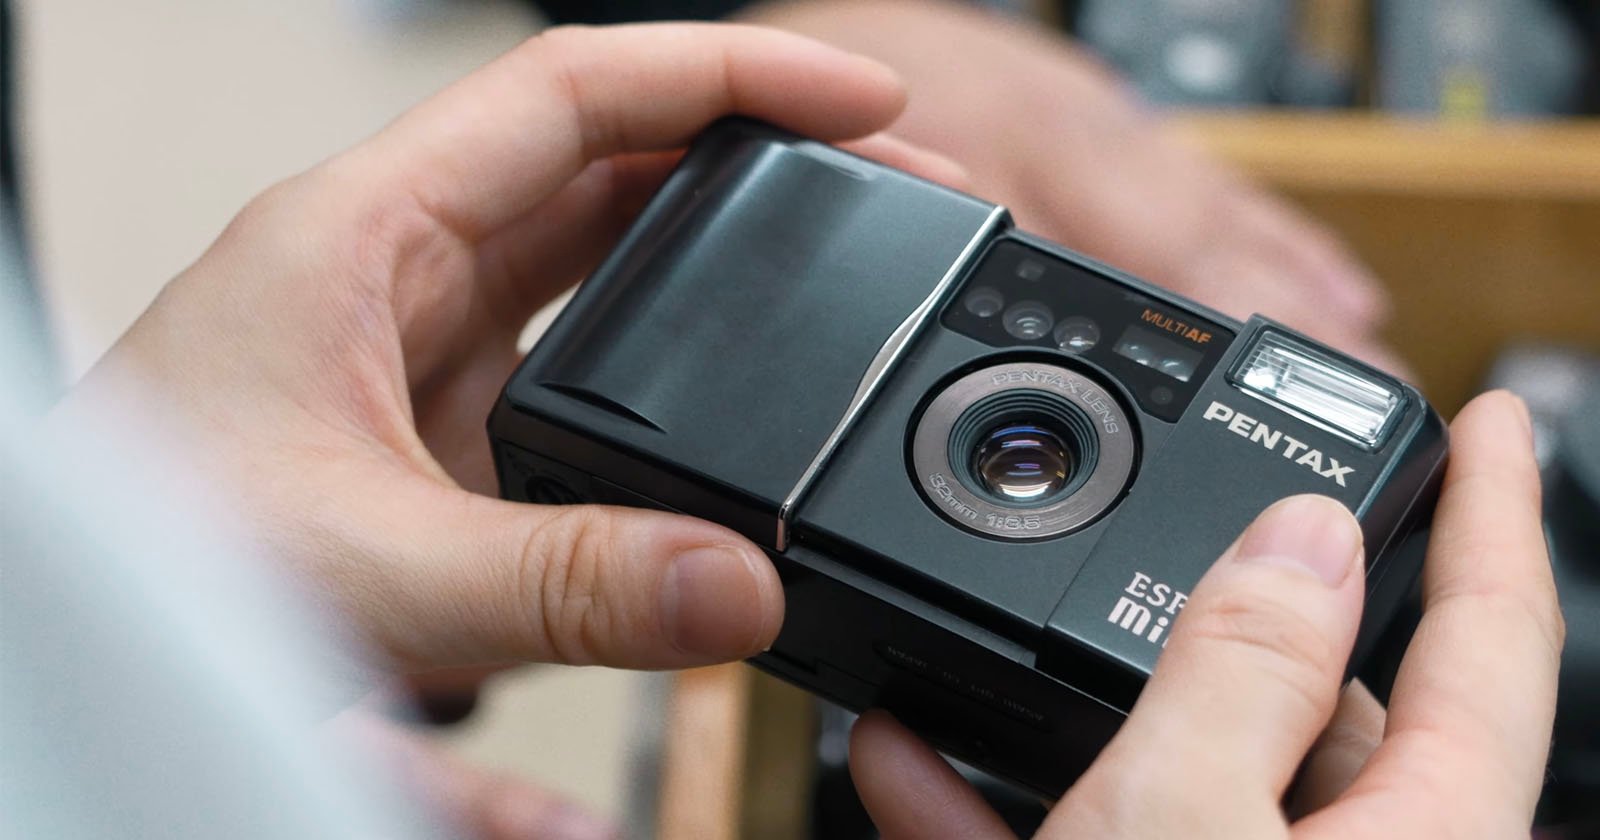  pentax brand-new film camera will lauch summer 